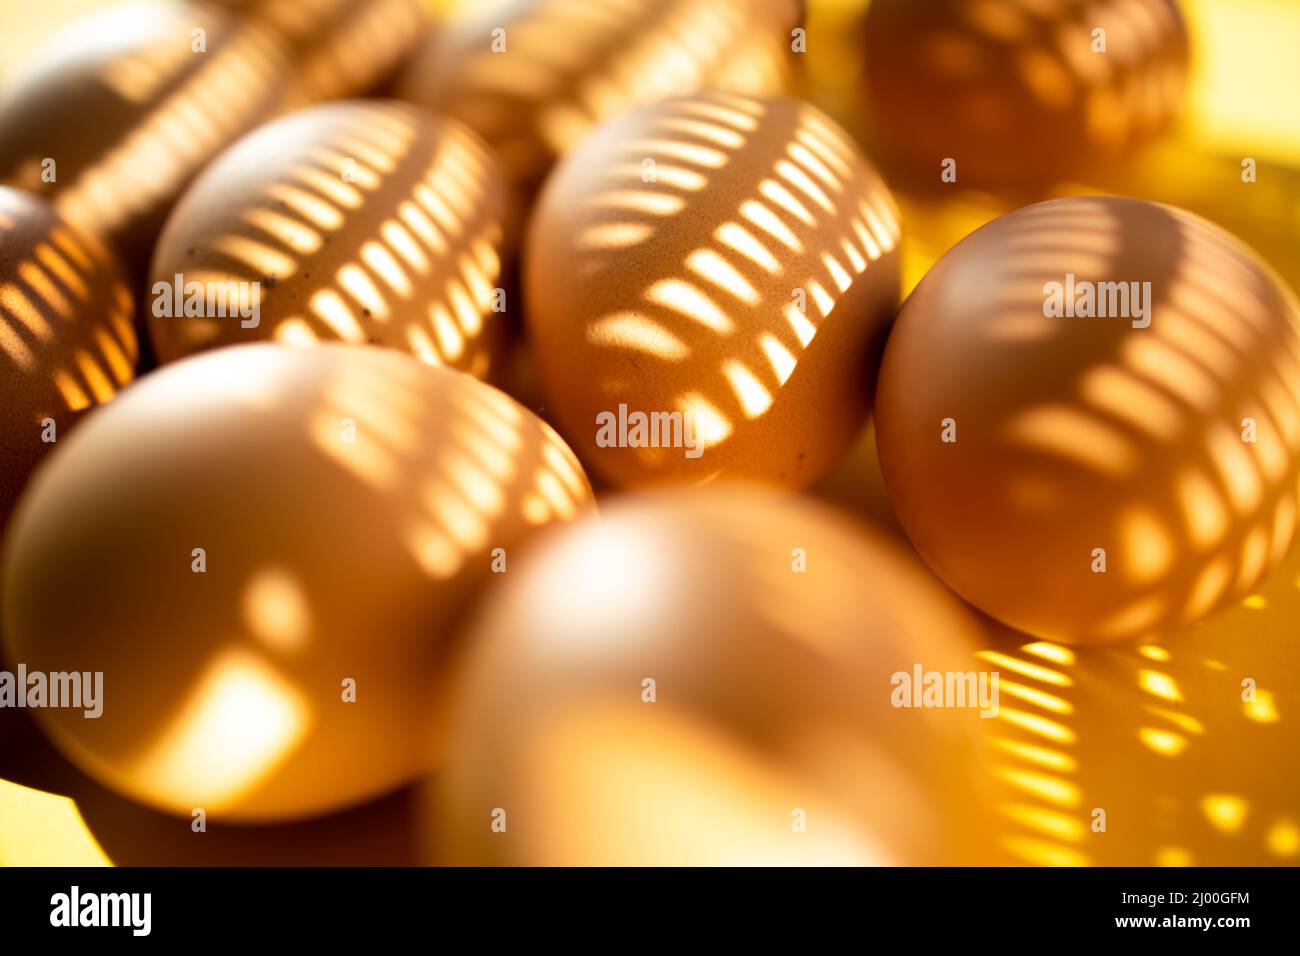 Primer plano del grupo de huevos crudos con patrón de sombra claro Foto de stock